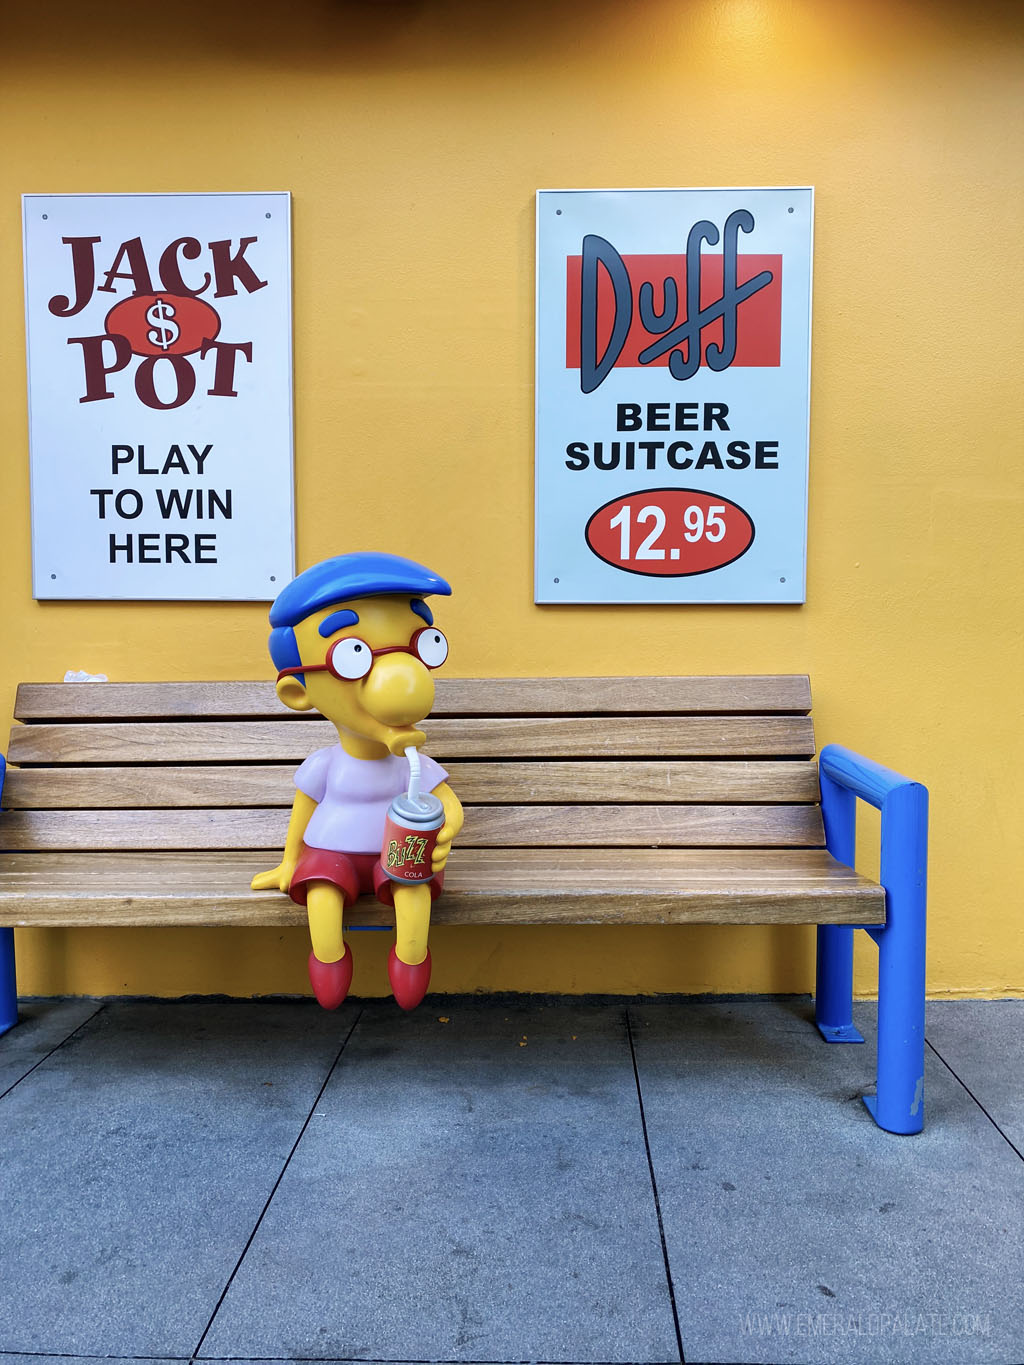 The Simpsons sculpture at Universal Studios